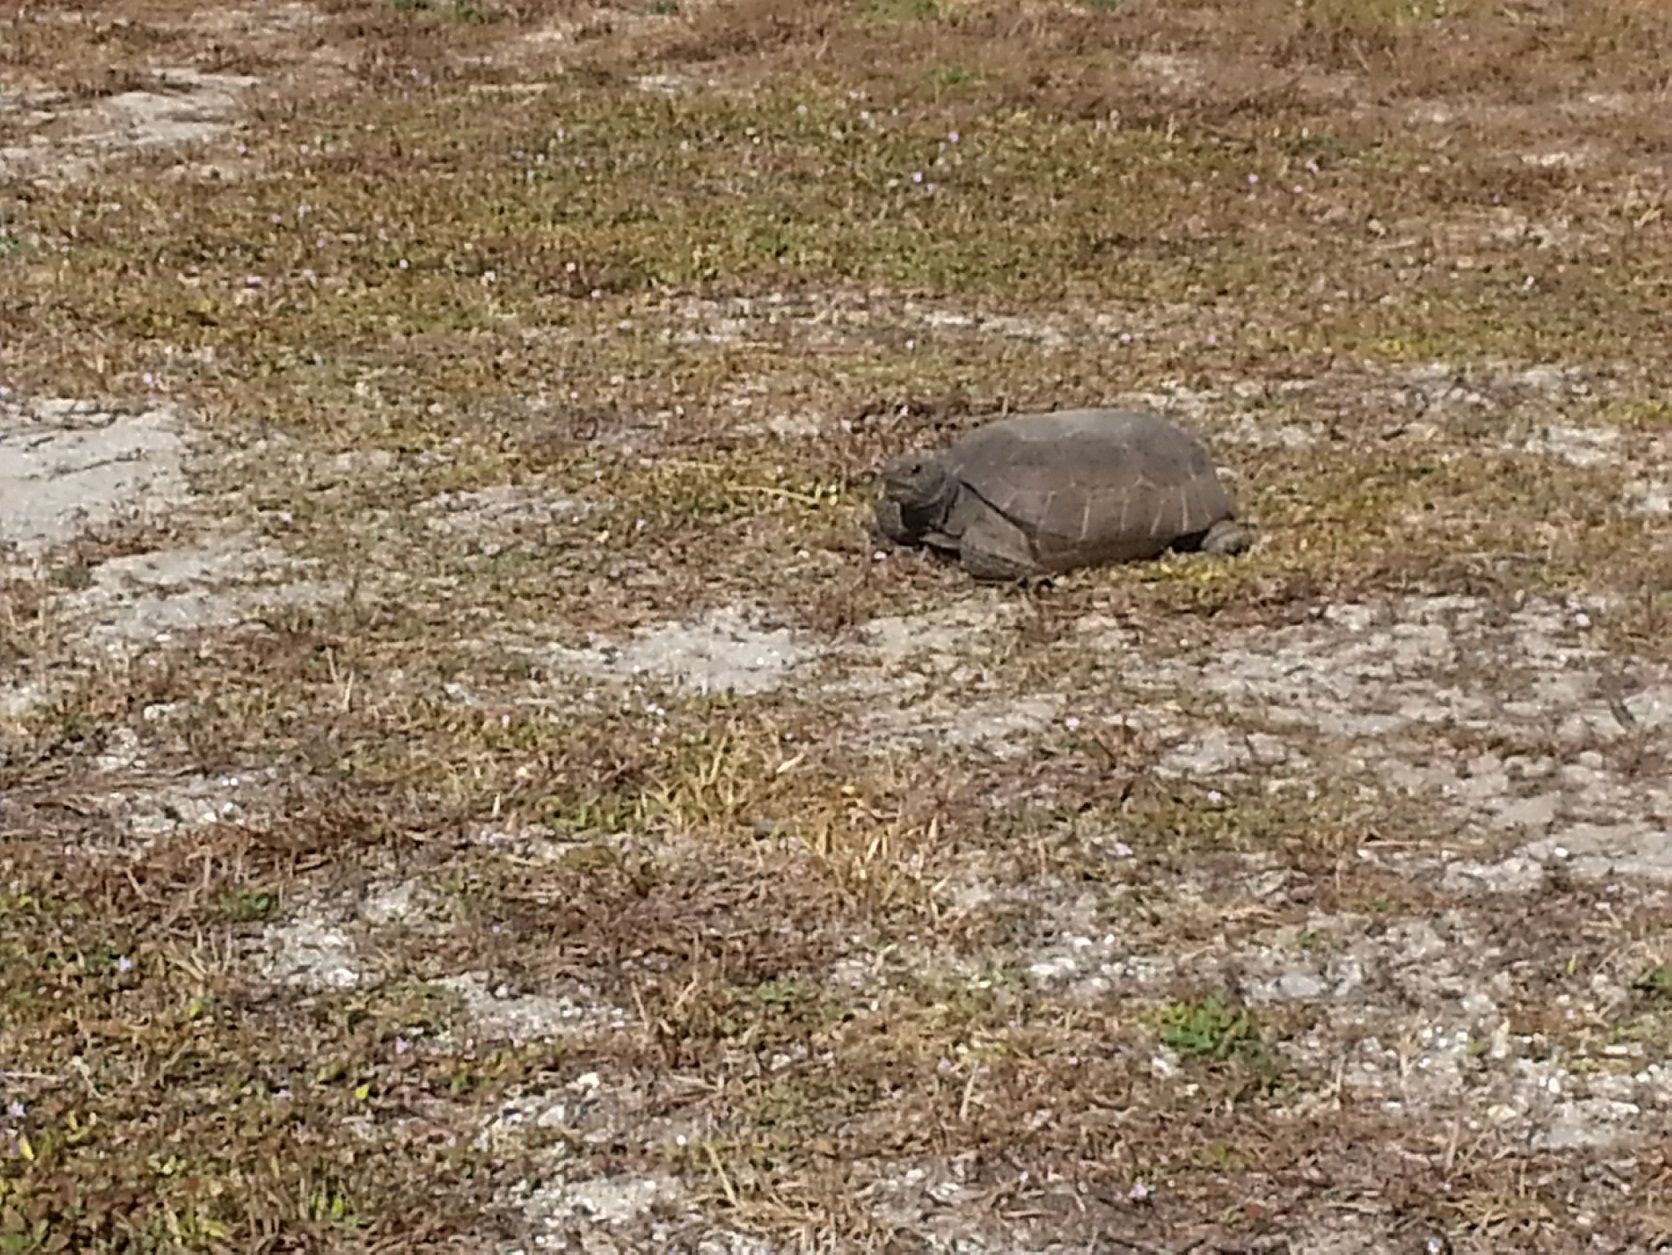 Florida Scrub Jay And Gopher Tortoise Steemit